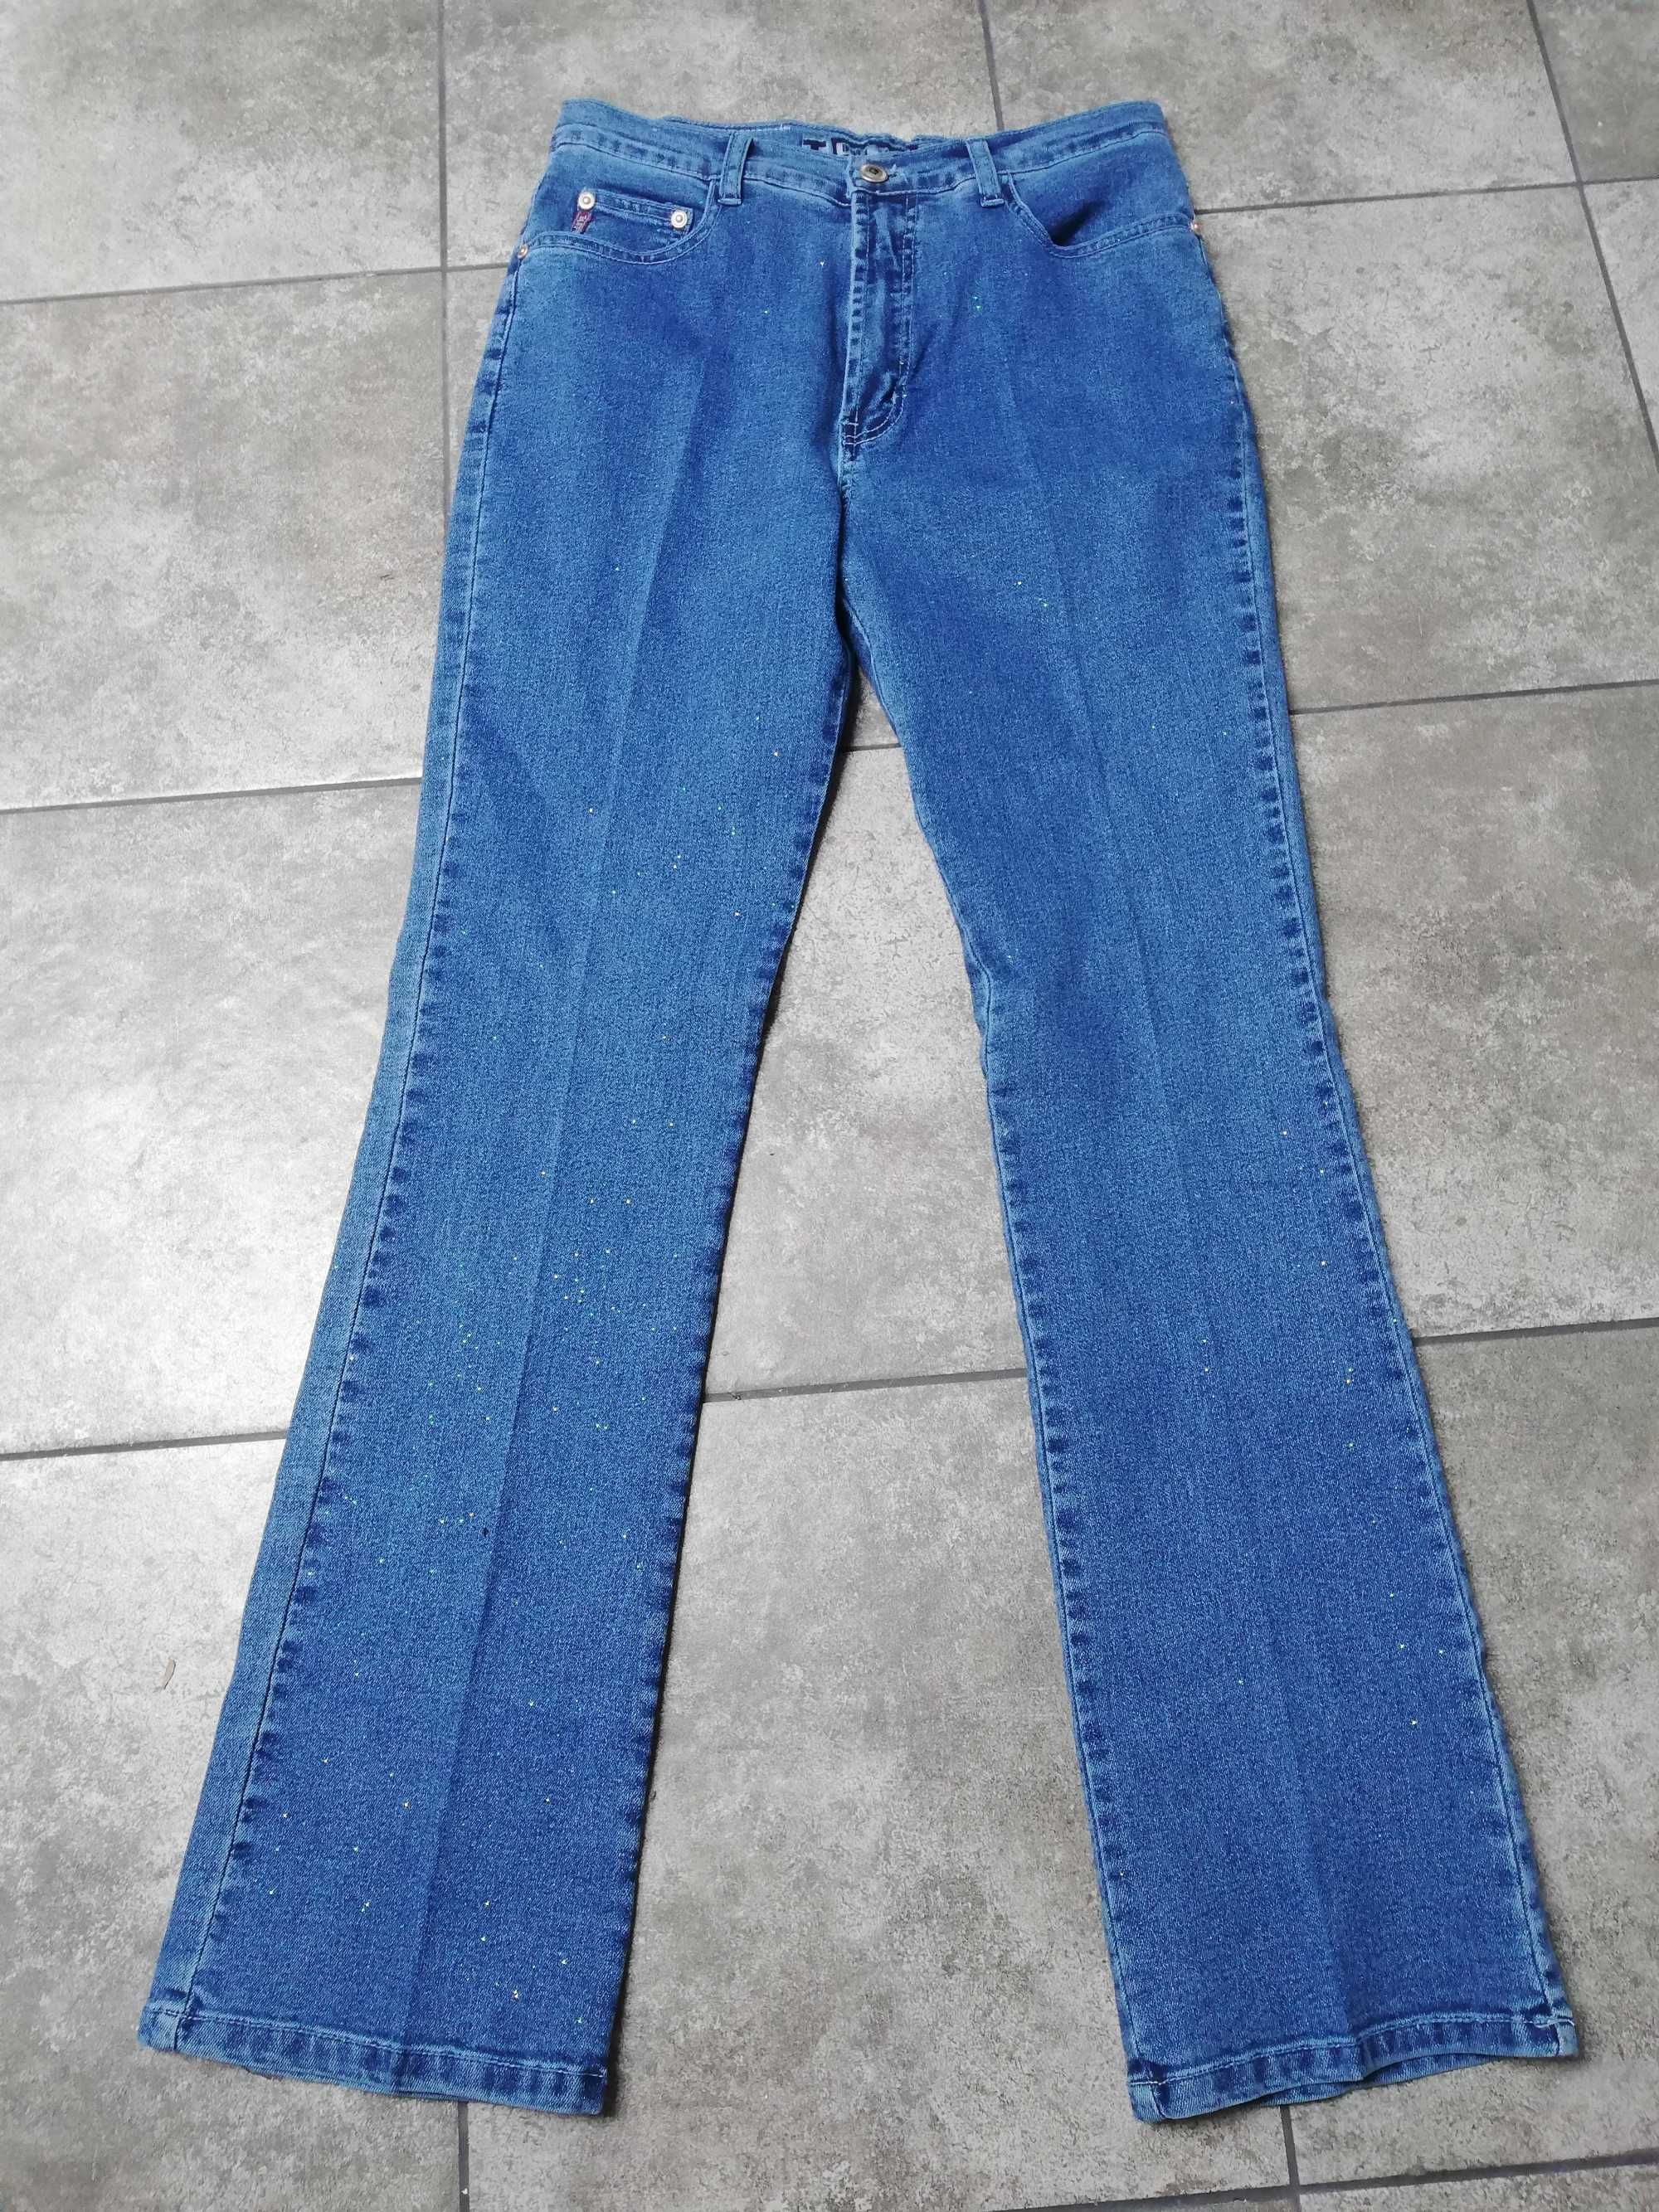 Jeansy brokatowe vintage Y2k 38-40 rozmiar M L